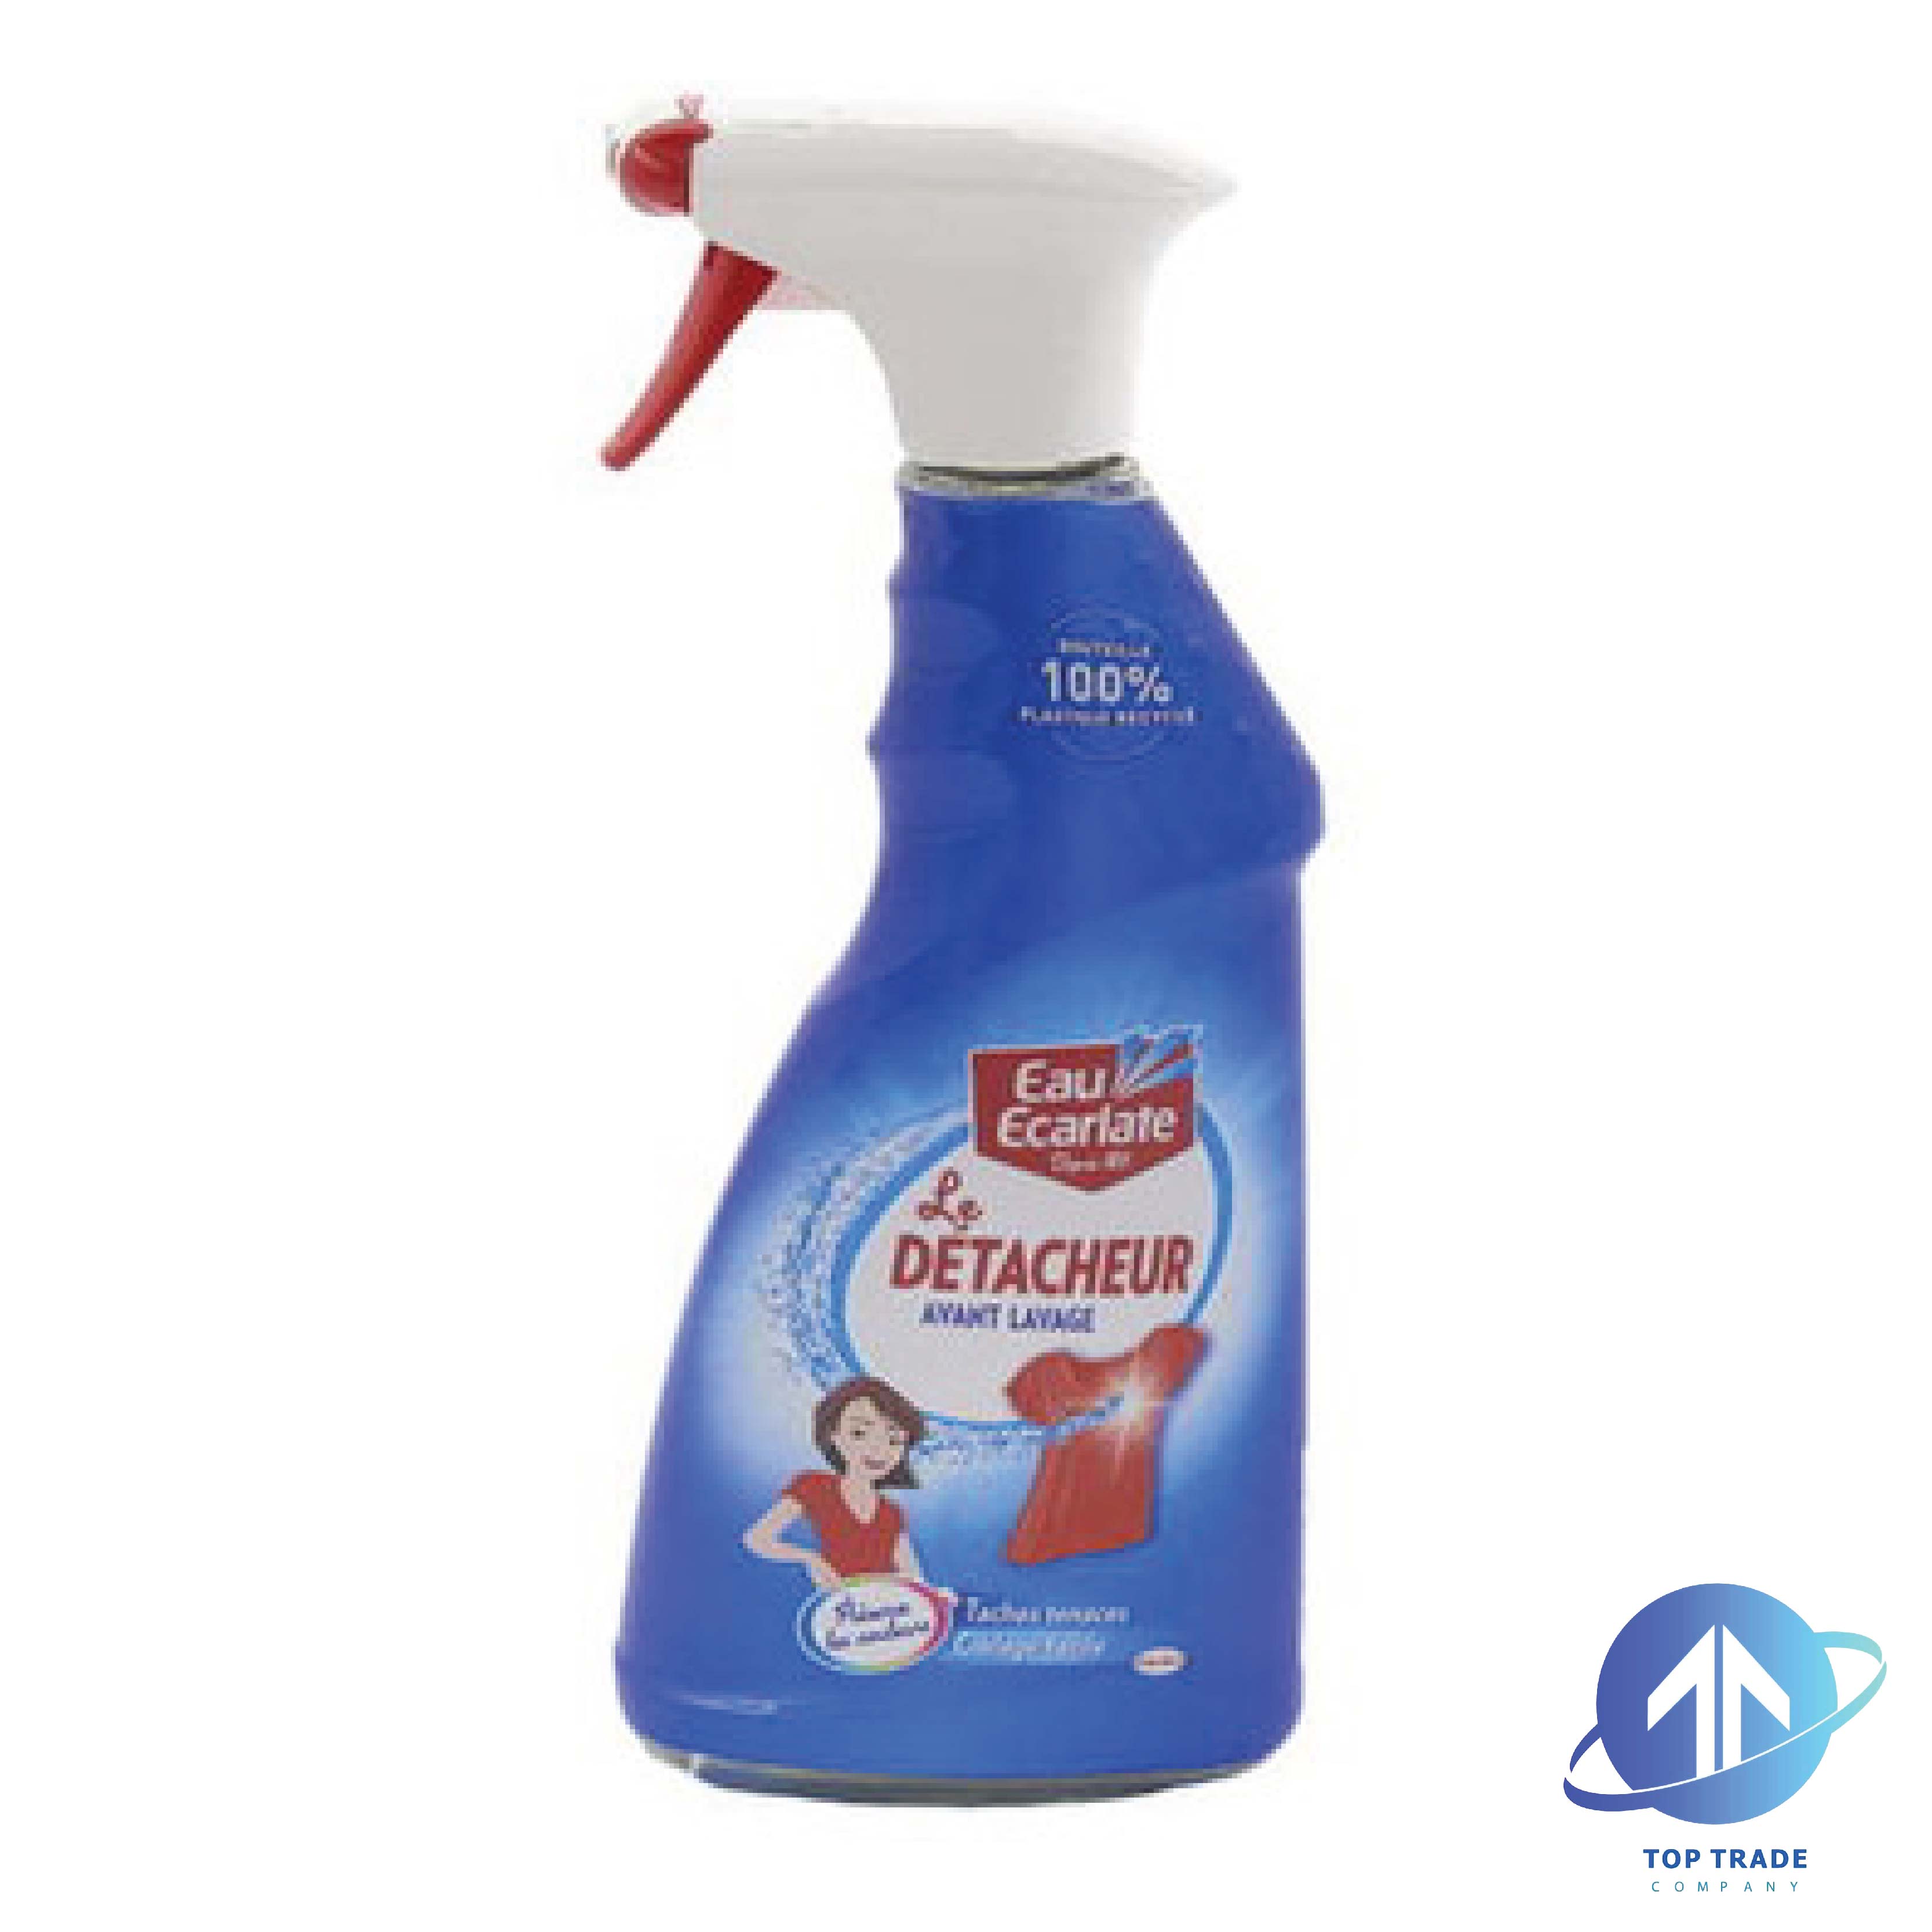 Eau Ecarlate spray pre-wash stain remover 500ml